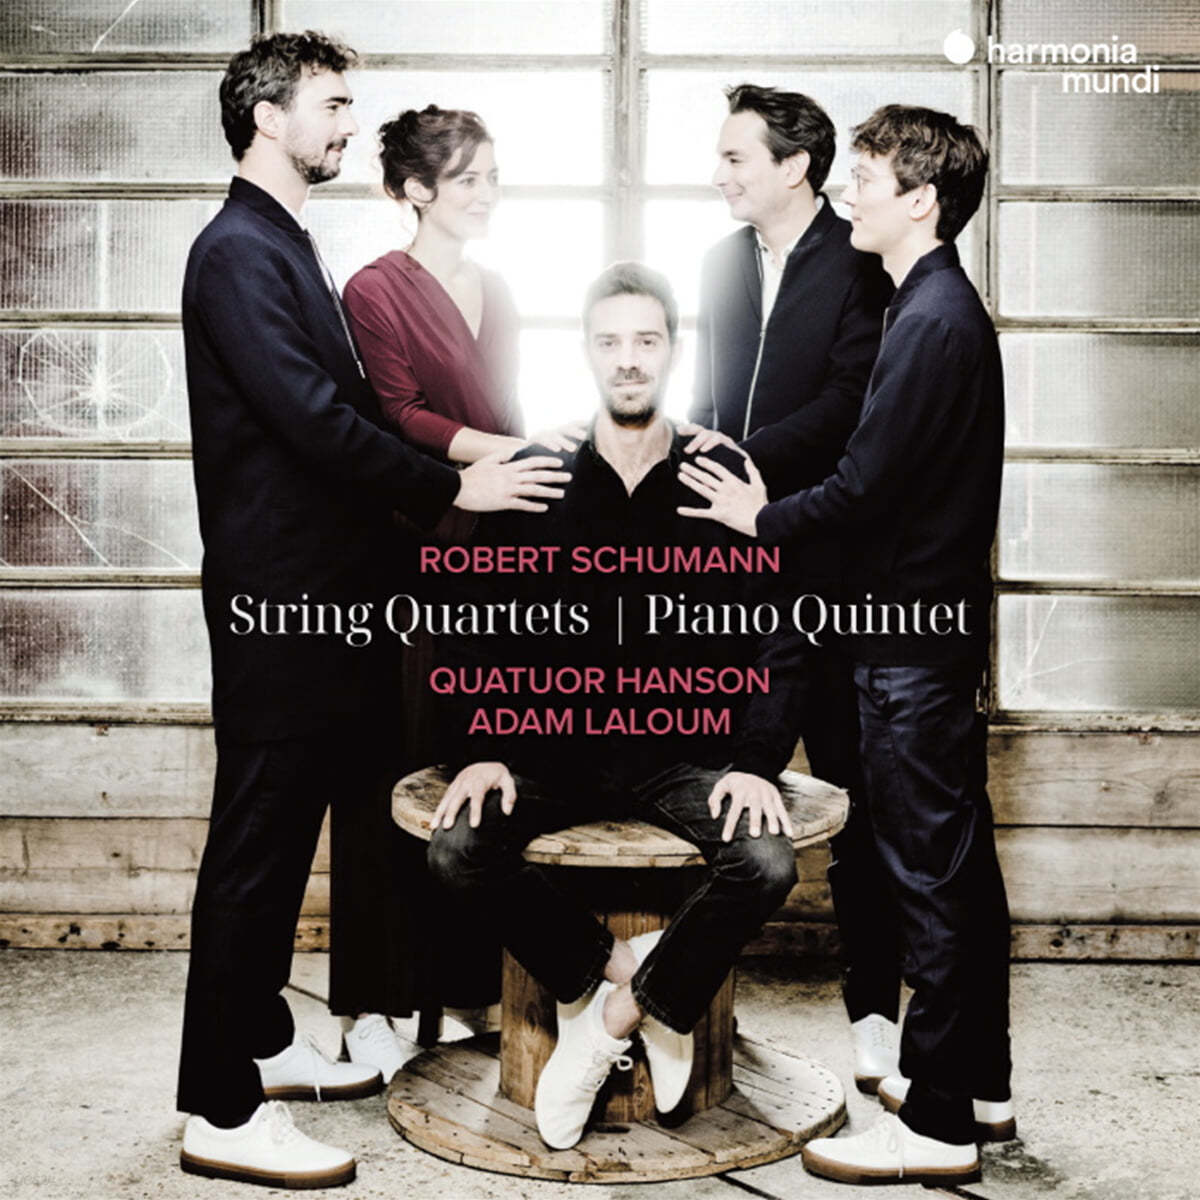 Adam Laloum / Quatuor Hanson 슈만: 현악 사중주, 피아노 오중주 (Schumann: String Quartets, Piano Quintet)